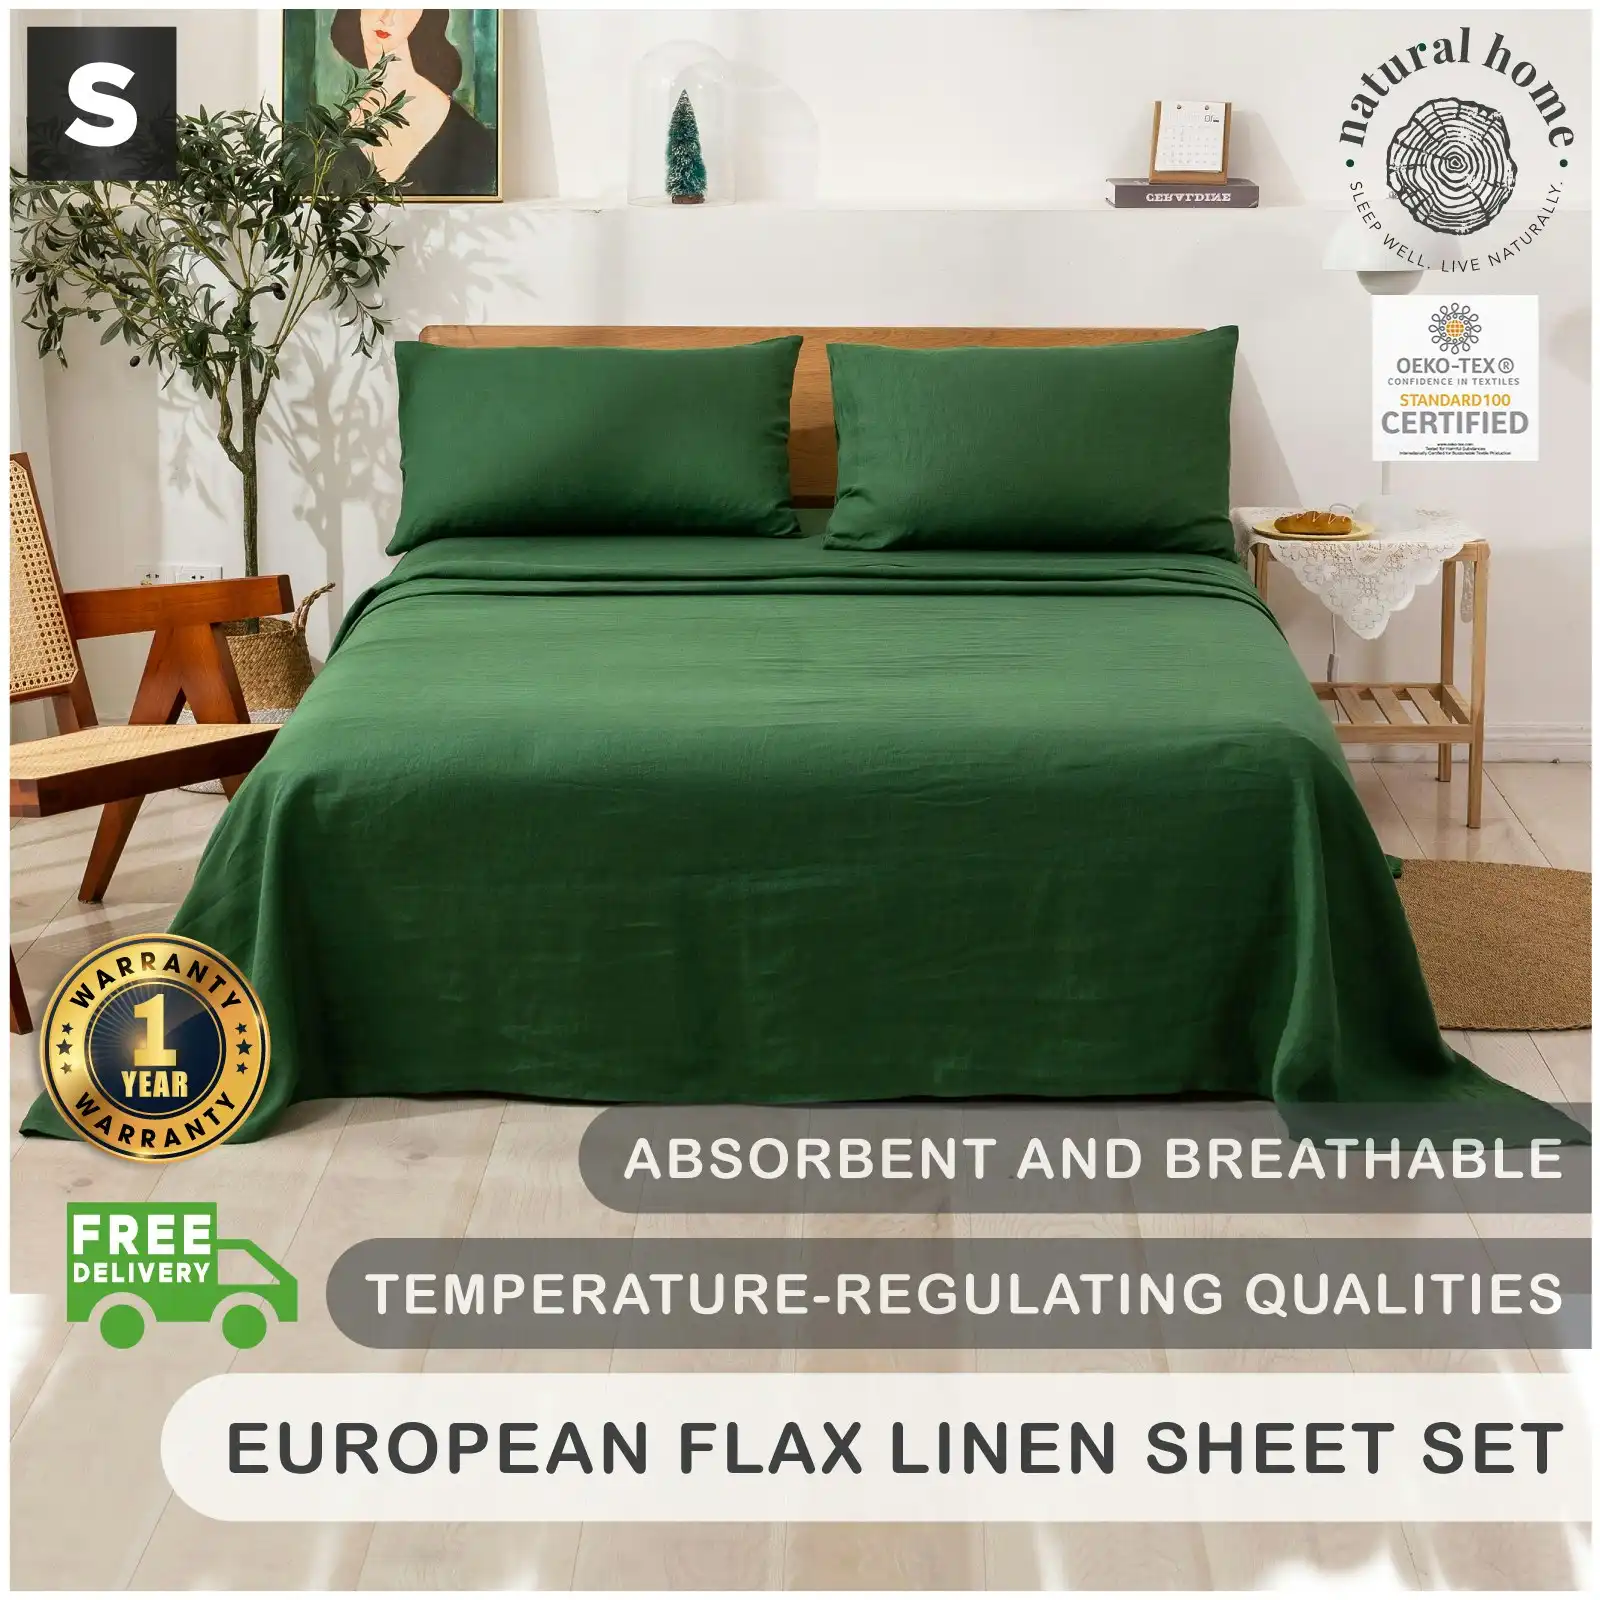 Natural Home 100% European Flax Linen Sheet Set - Olive - Single Bed